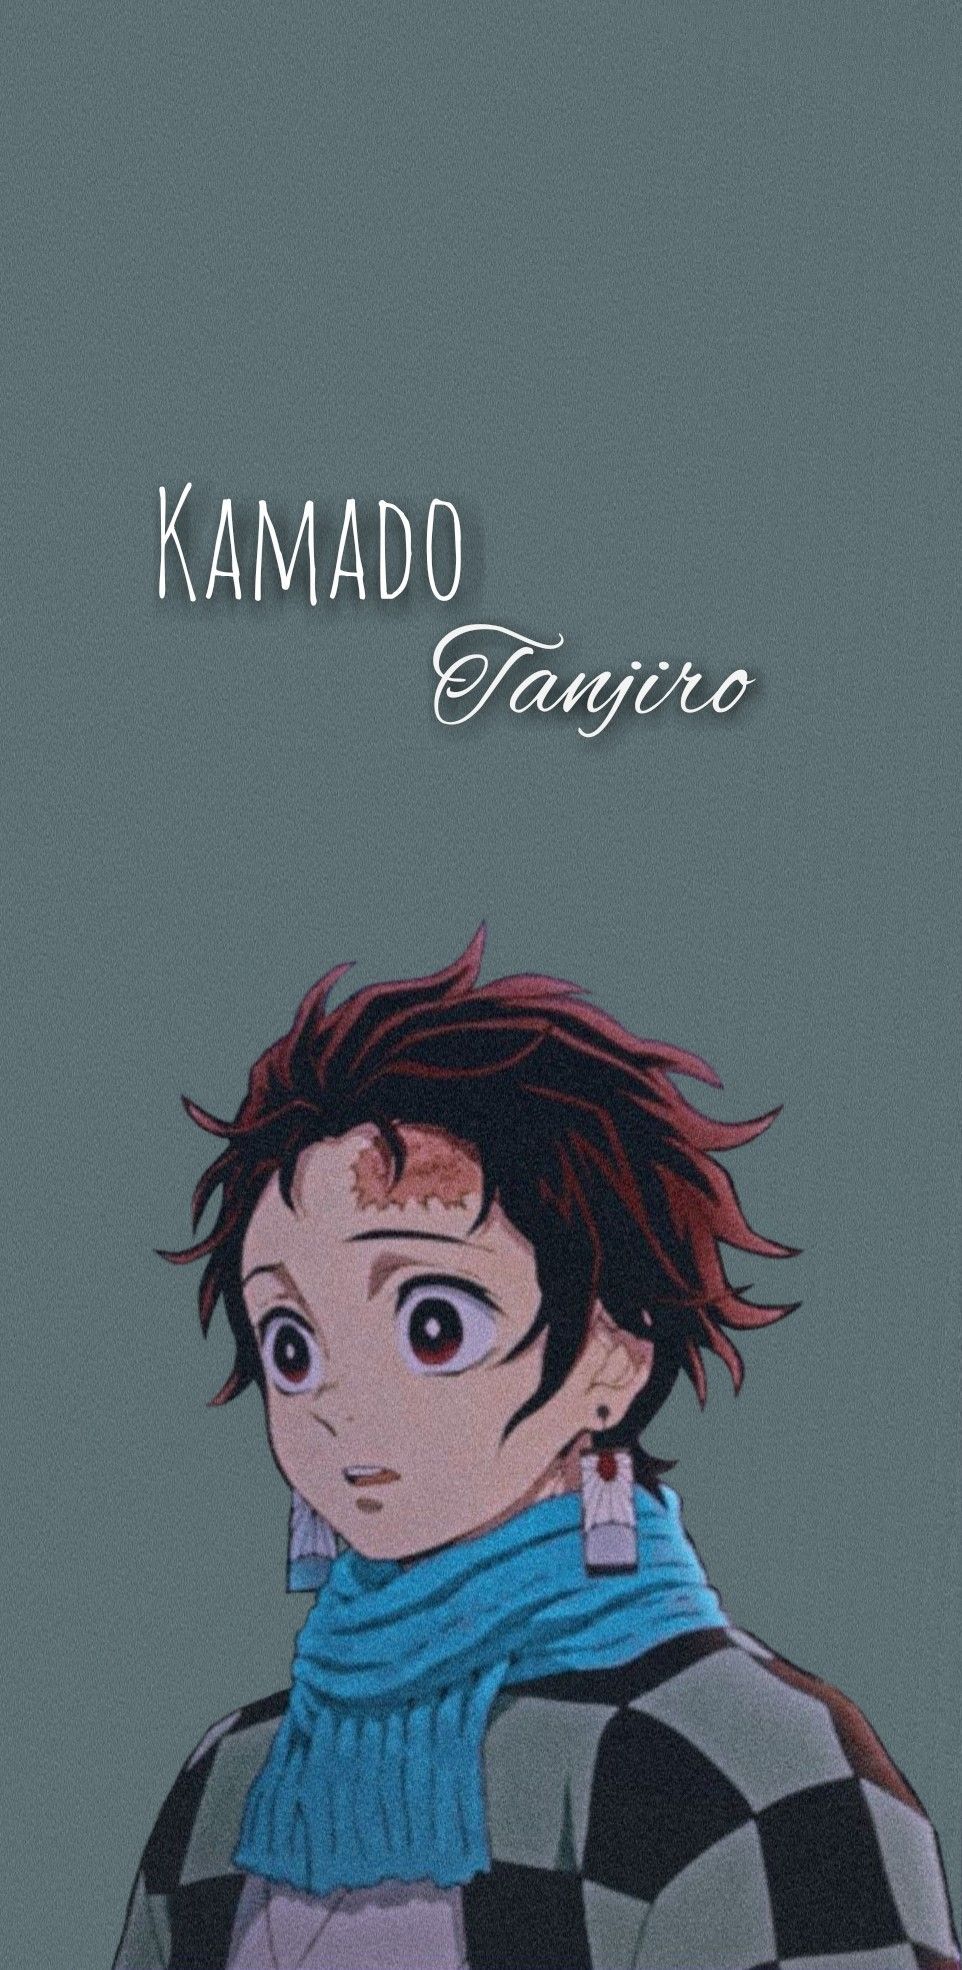 Kamado Tanjiro wallpaper aesthetic. Anime wallpaper phone, Cool anime wallpaper, Cute anime wallpaper